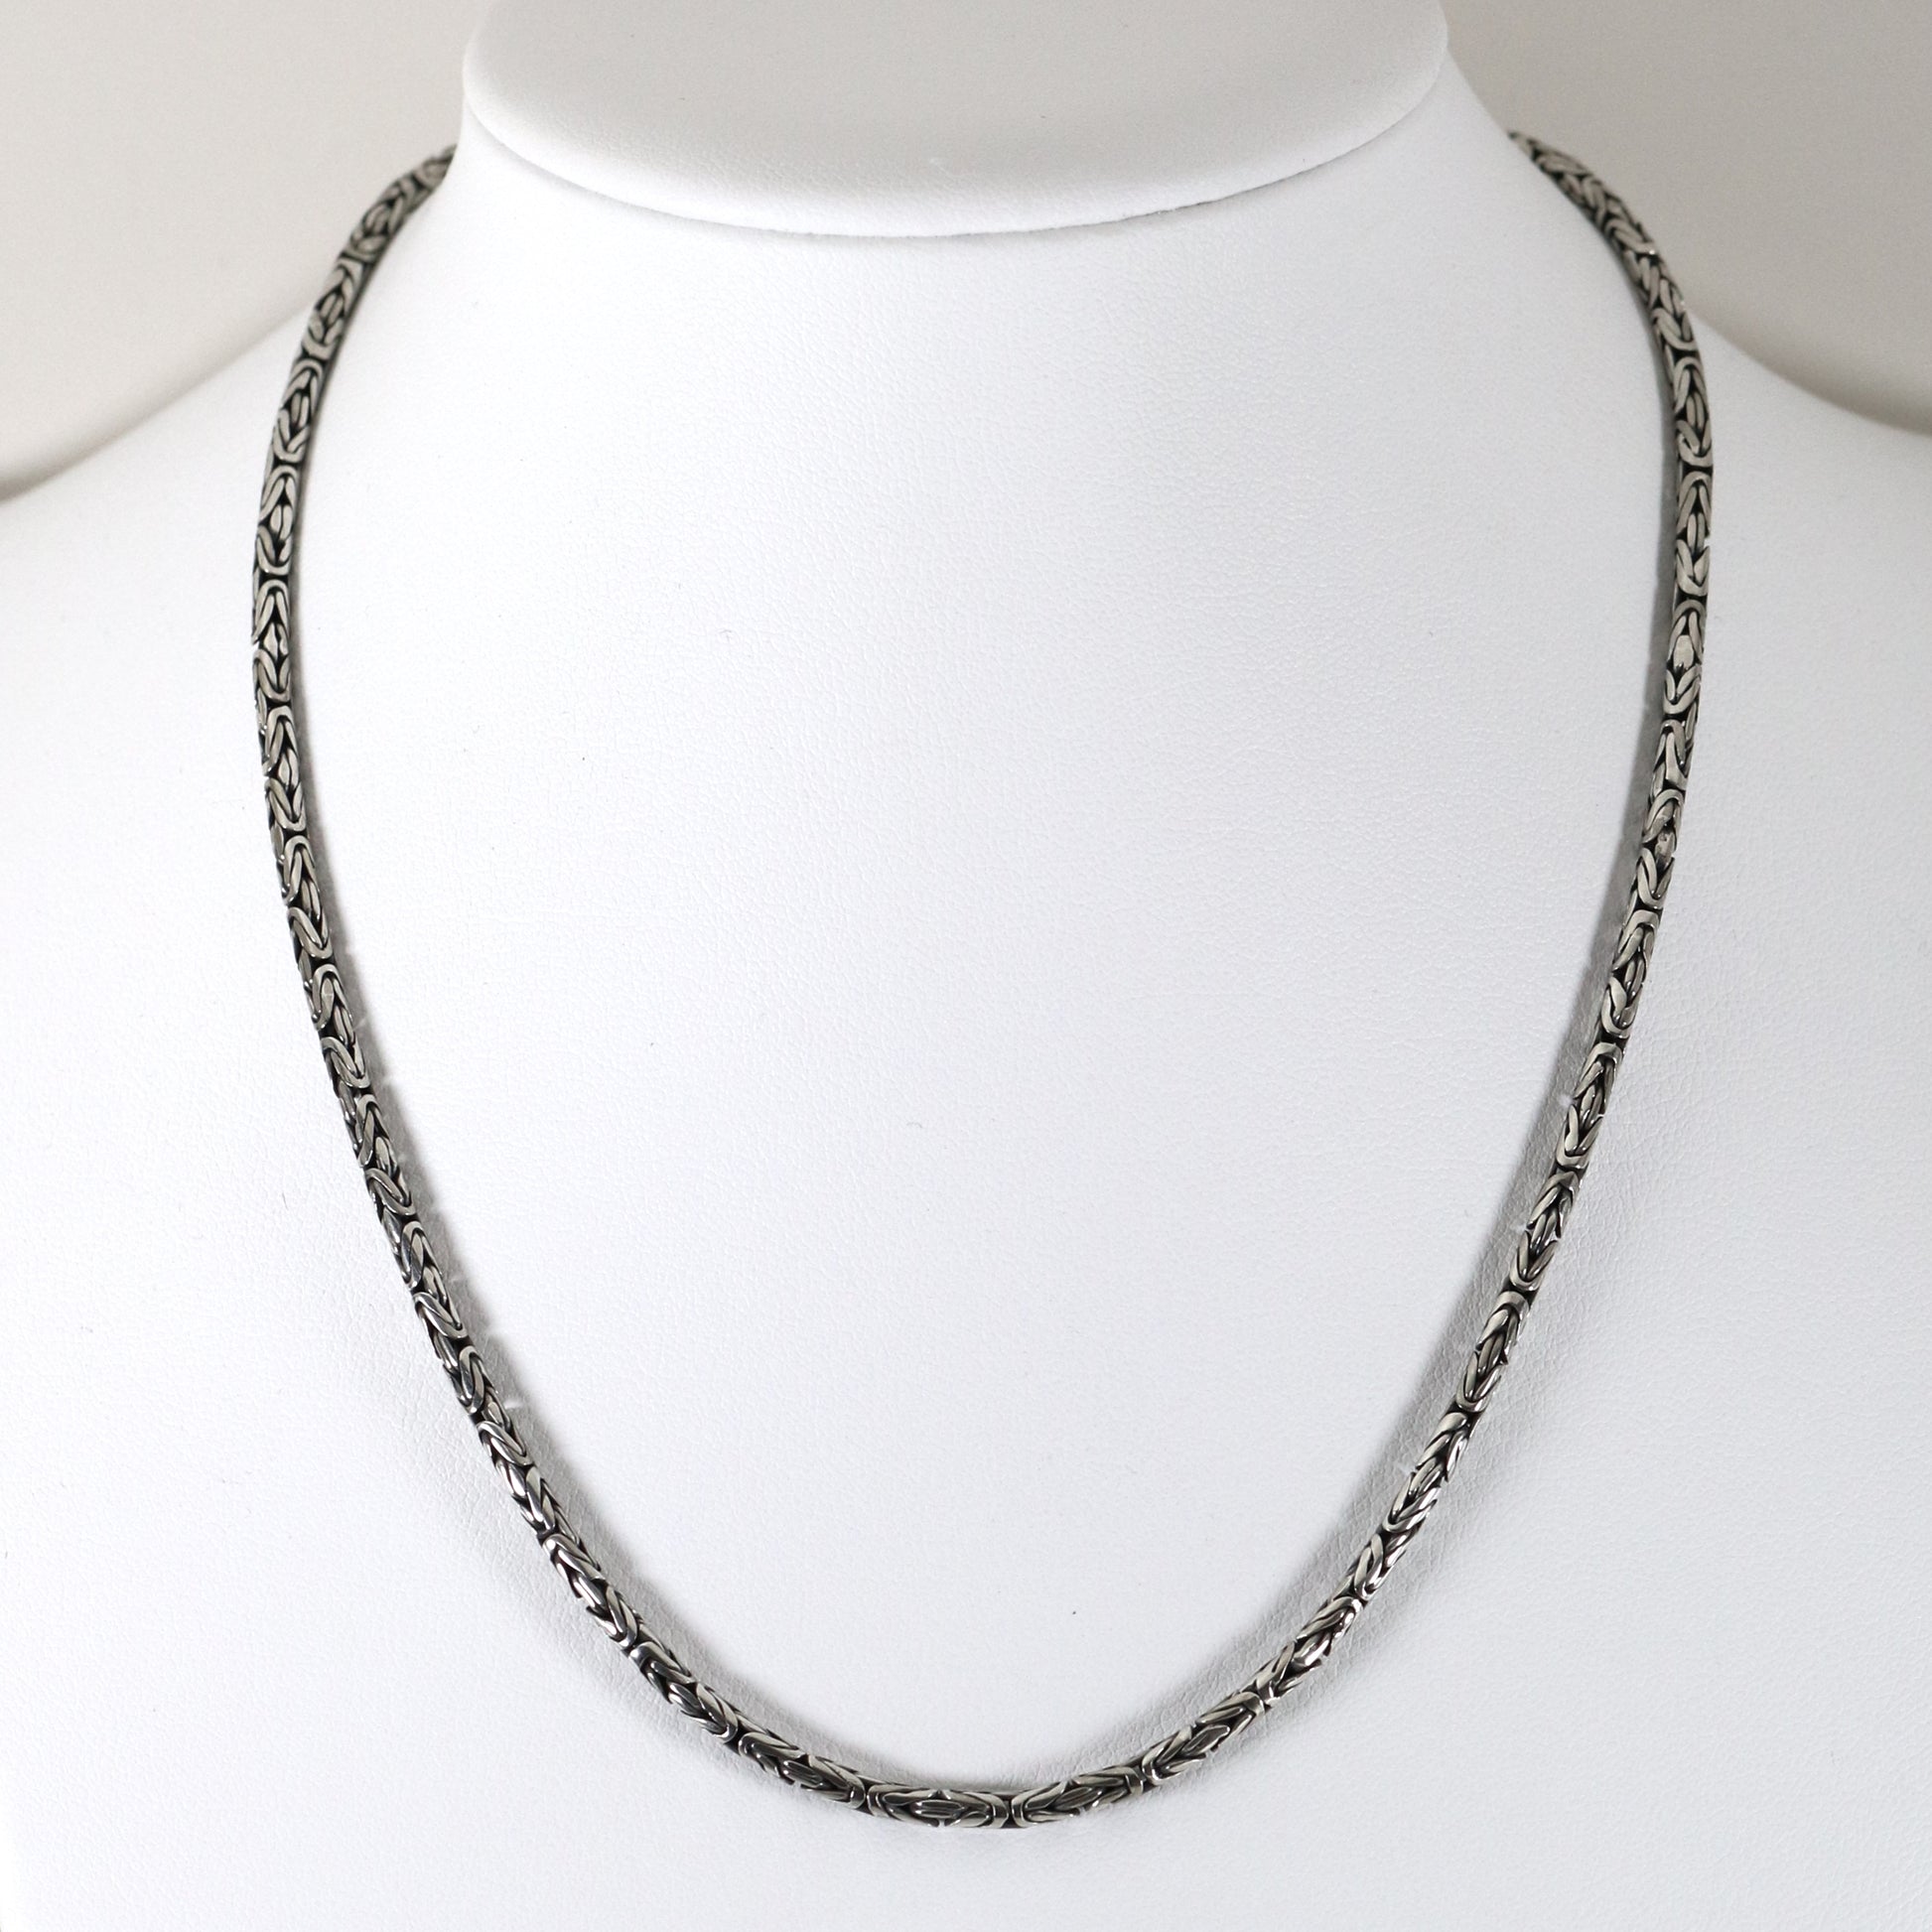 Vintage Silver Jewelry | Byzantine Chain Link Necklace 16" 3mm - Carmel Fine Silver Jewelry